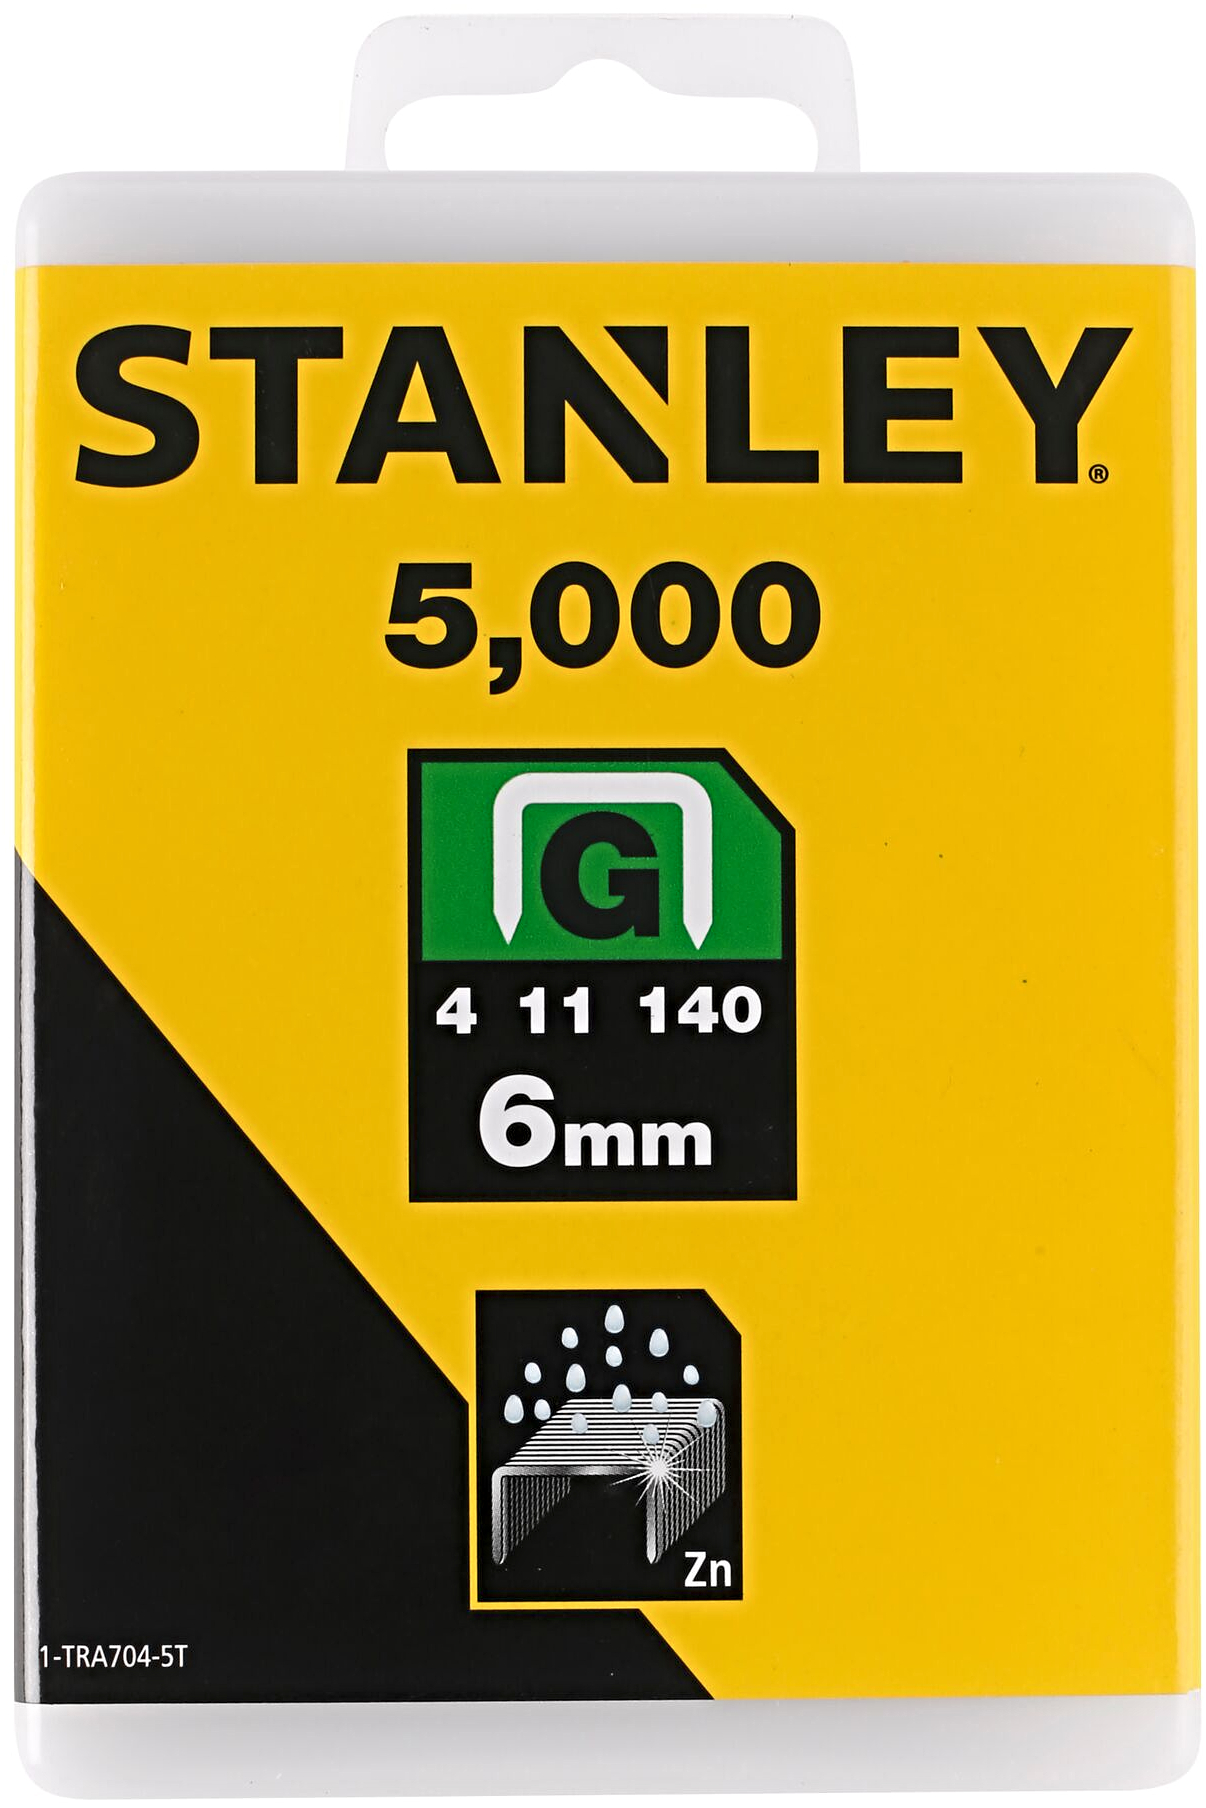 STANLEY 1-TRA704-5T spony HD typ G - 10,6 mm, délka 6mm, 5000 ks